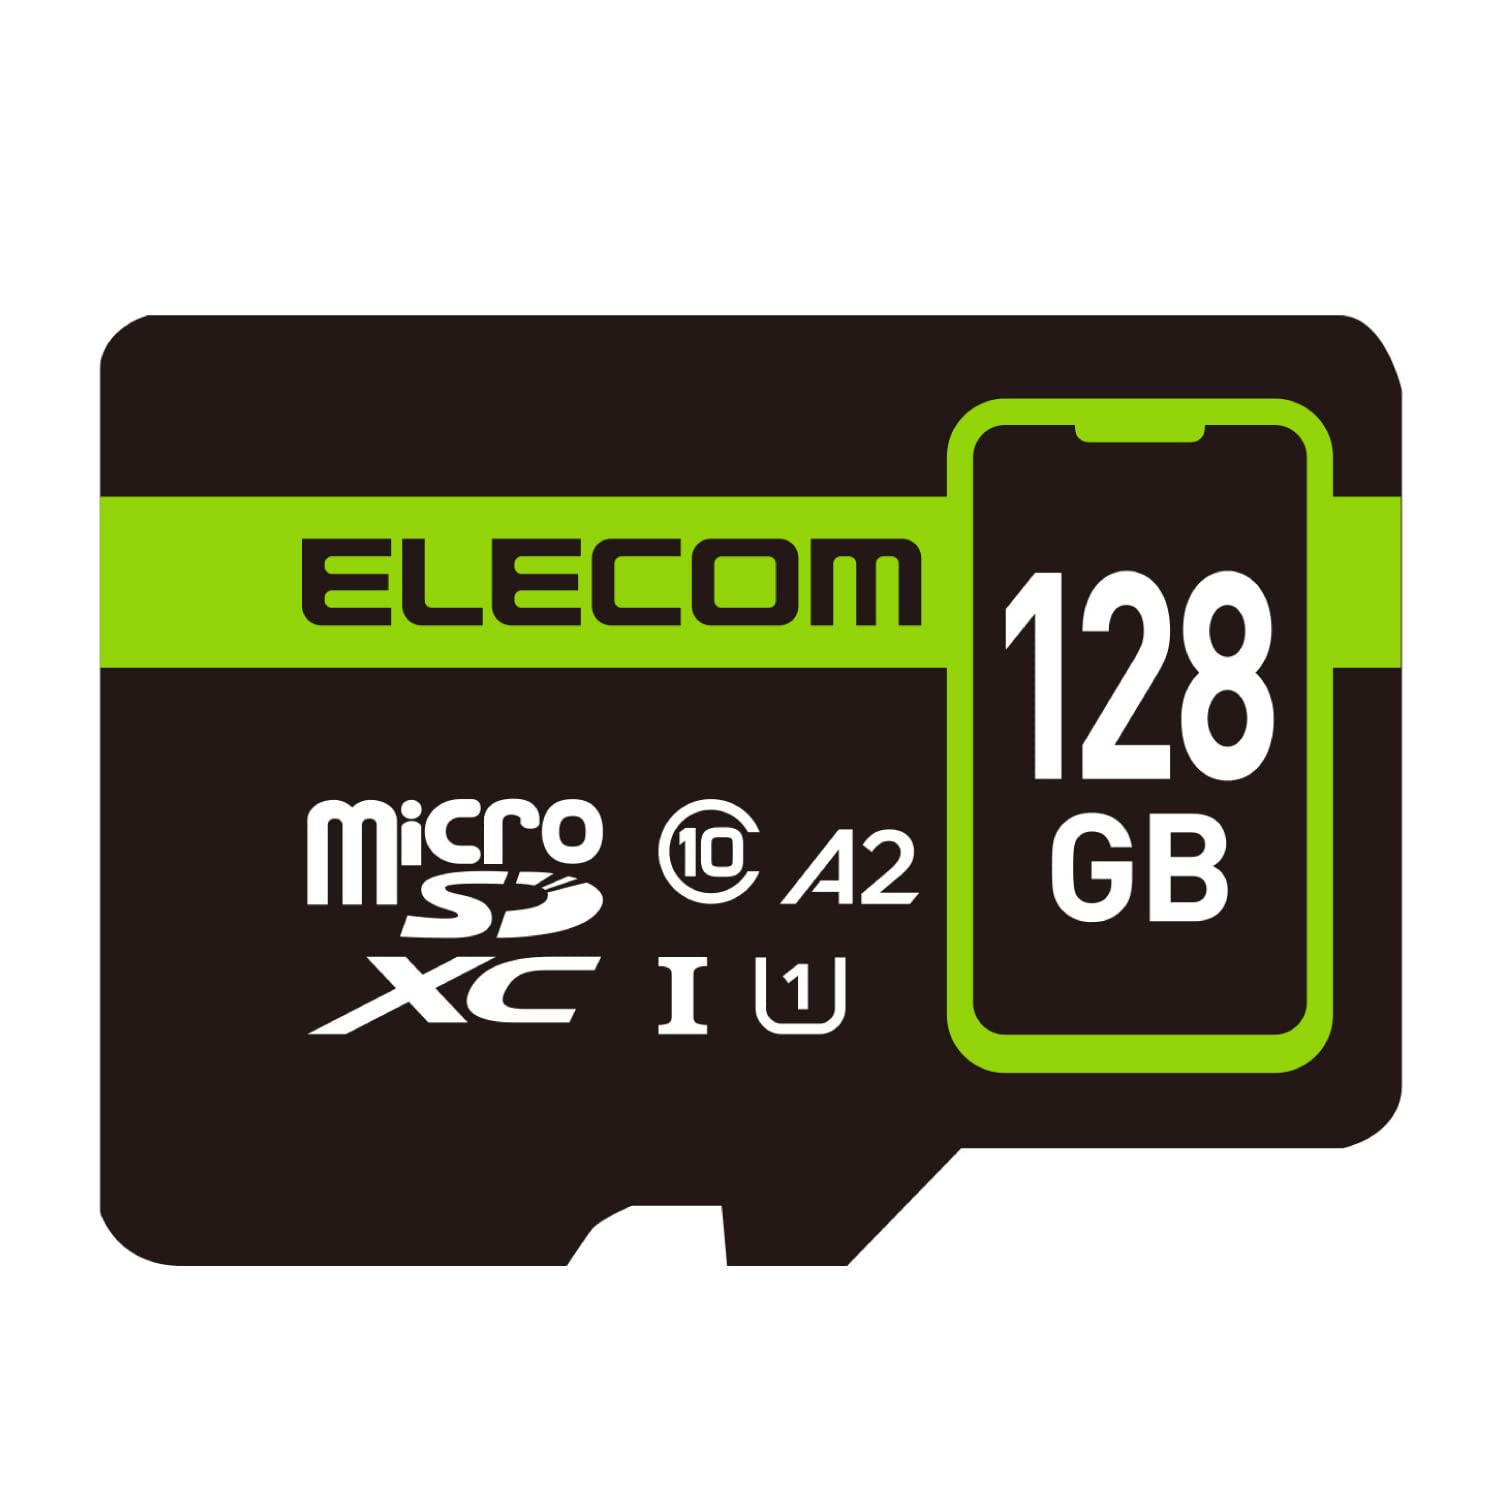 GR microSD 128GB UHS-I U1 90MB/s microSDXCJ[h f[^T[rX2Nt MF-SP1 @